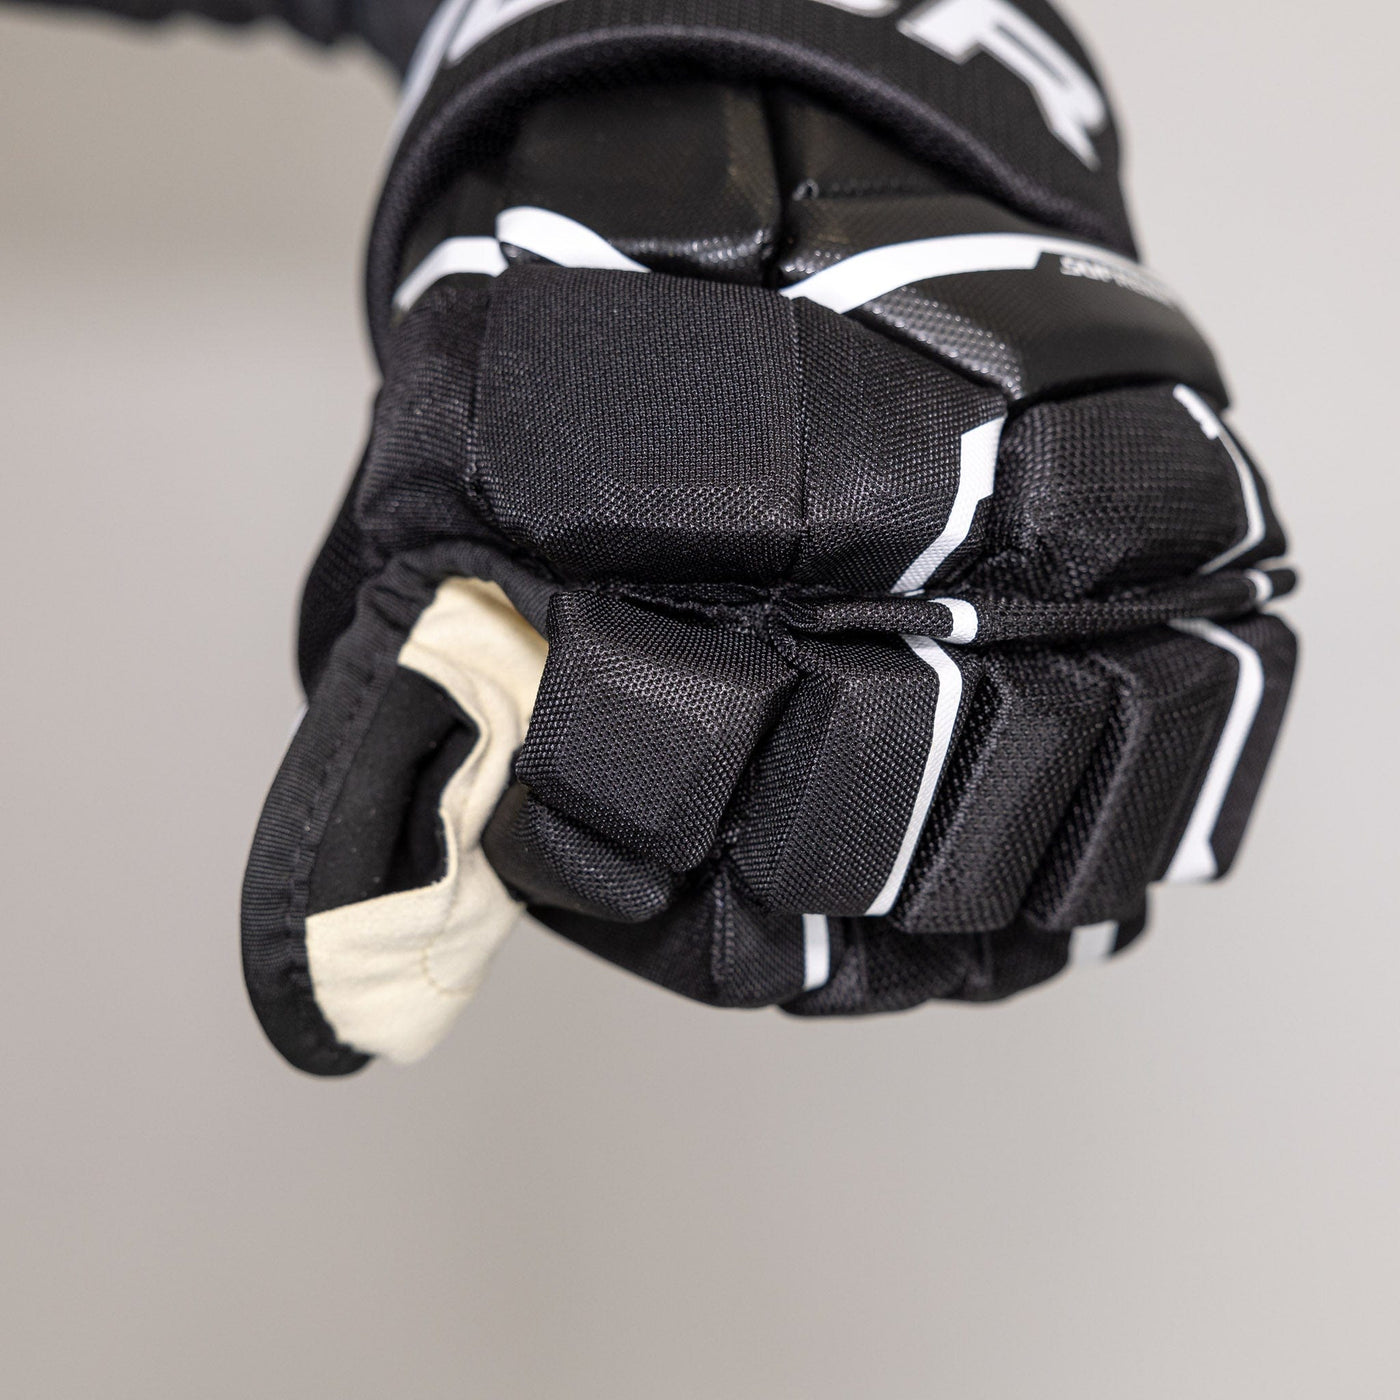 Bauer Supreme Matrix Intermediate Hockey Gloves - The Hockey Shop Source For Sports